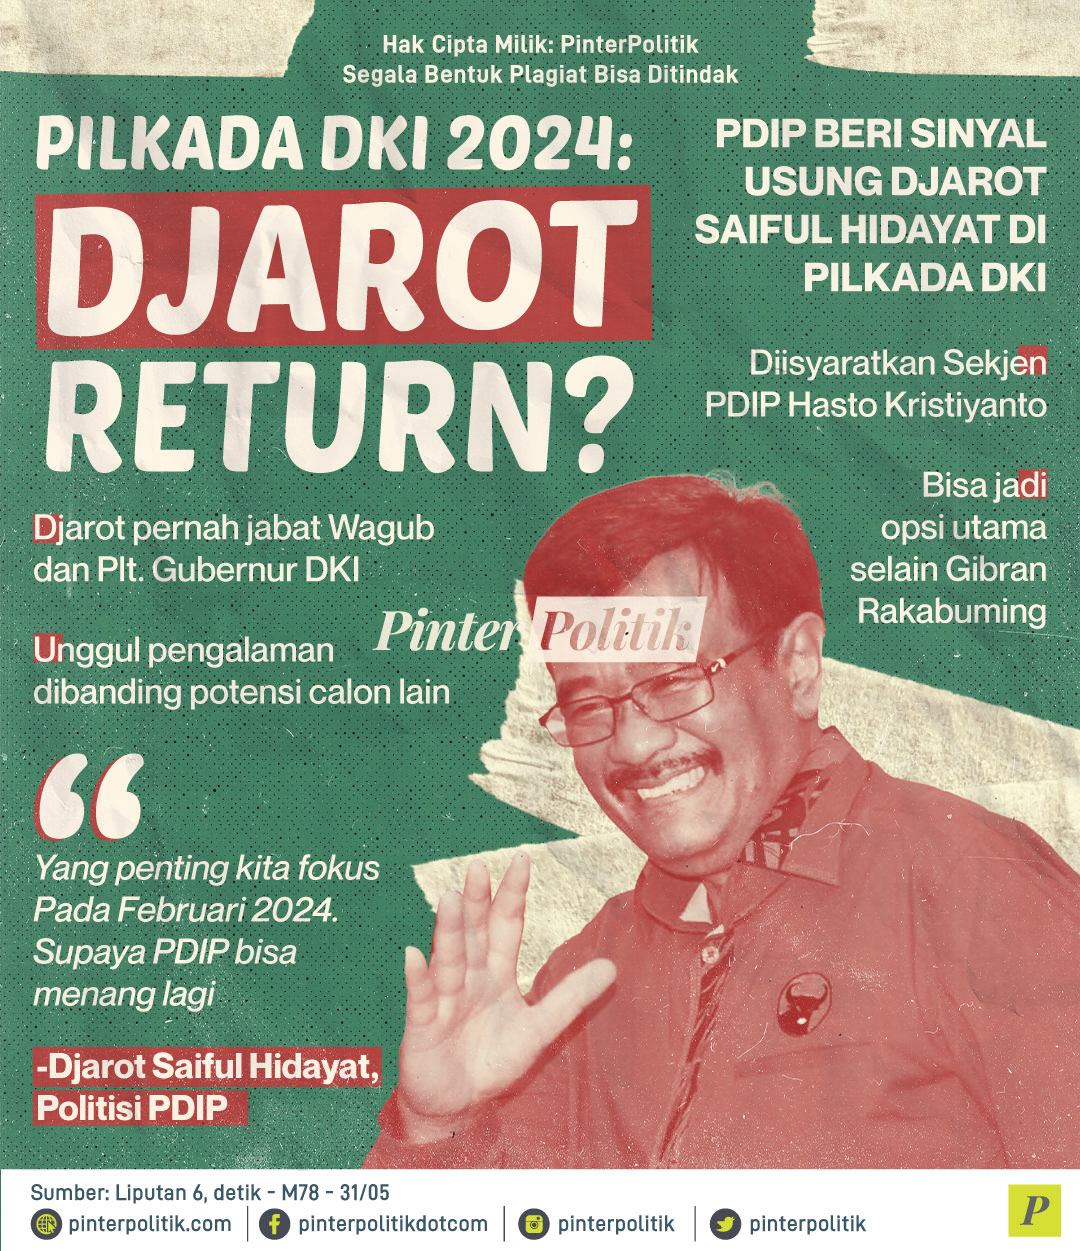 Pilkada DKI 2024 Djarot Return?